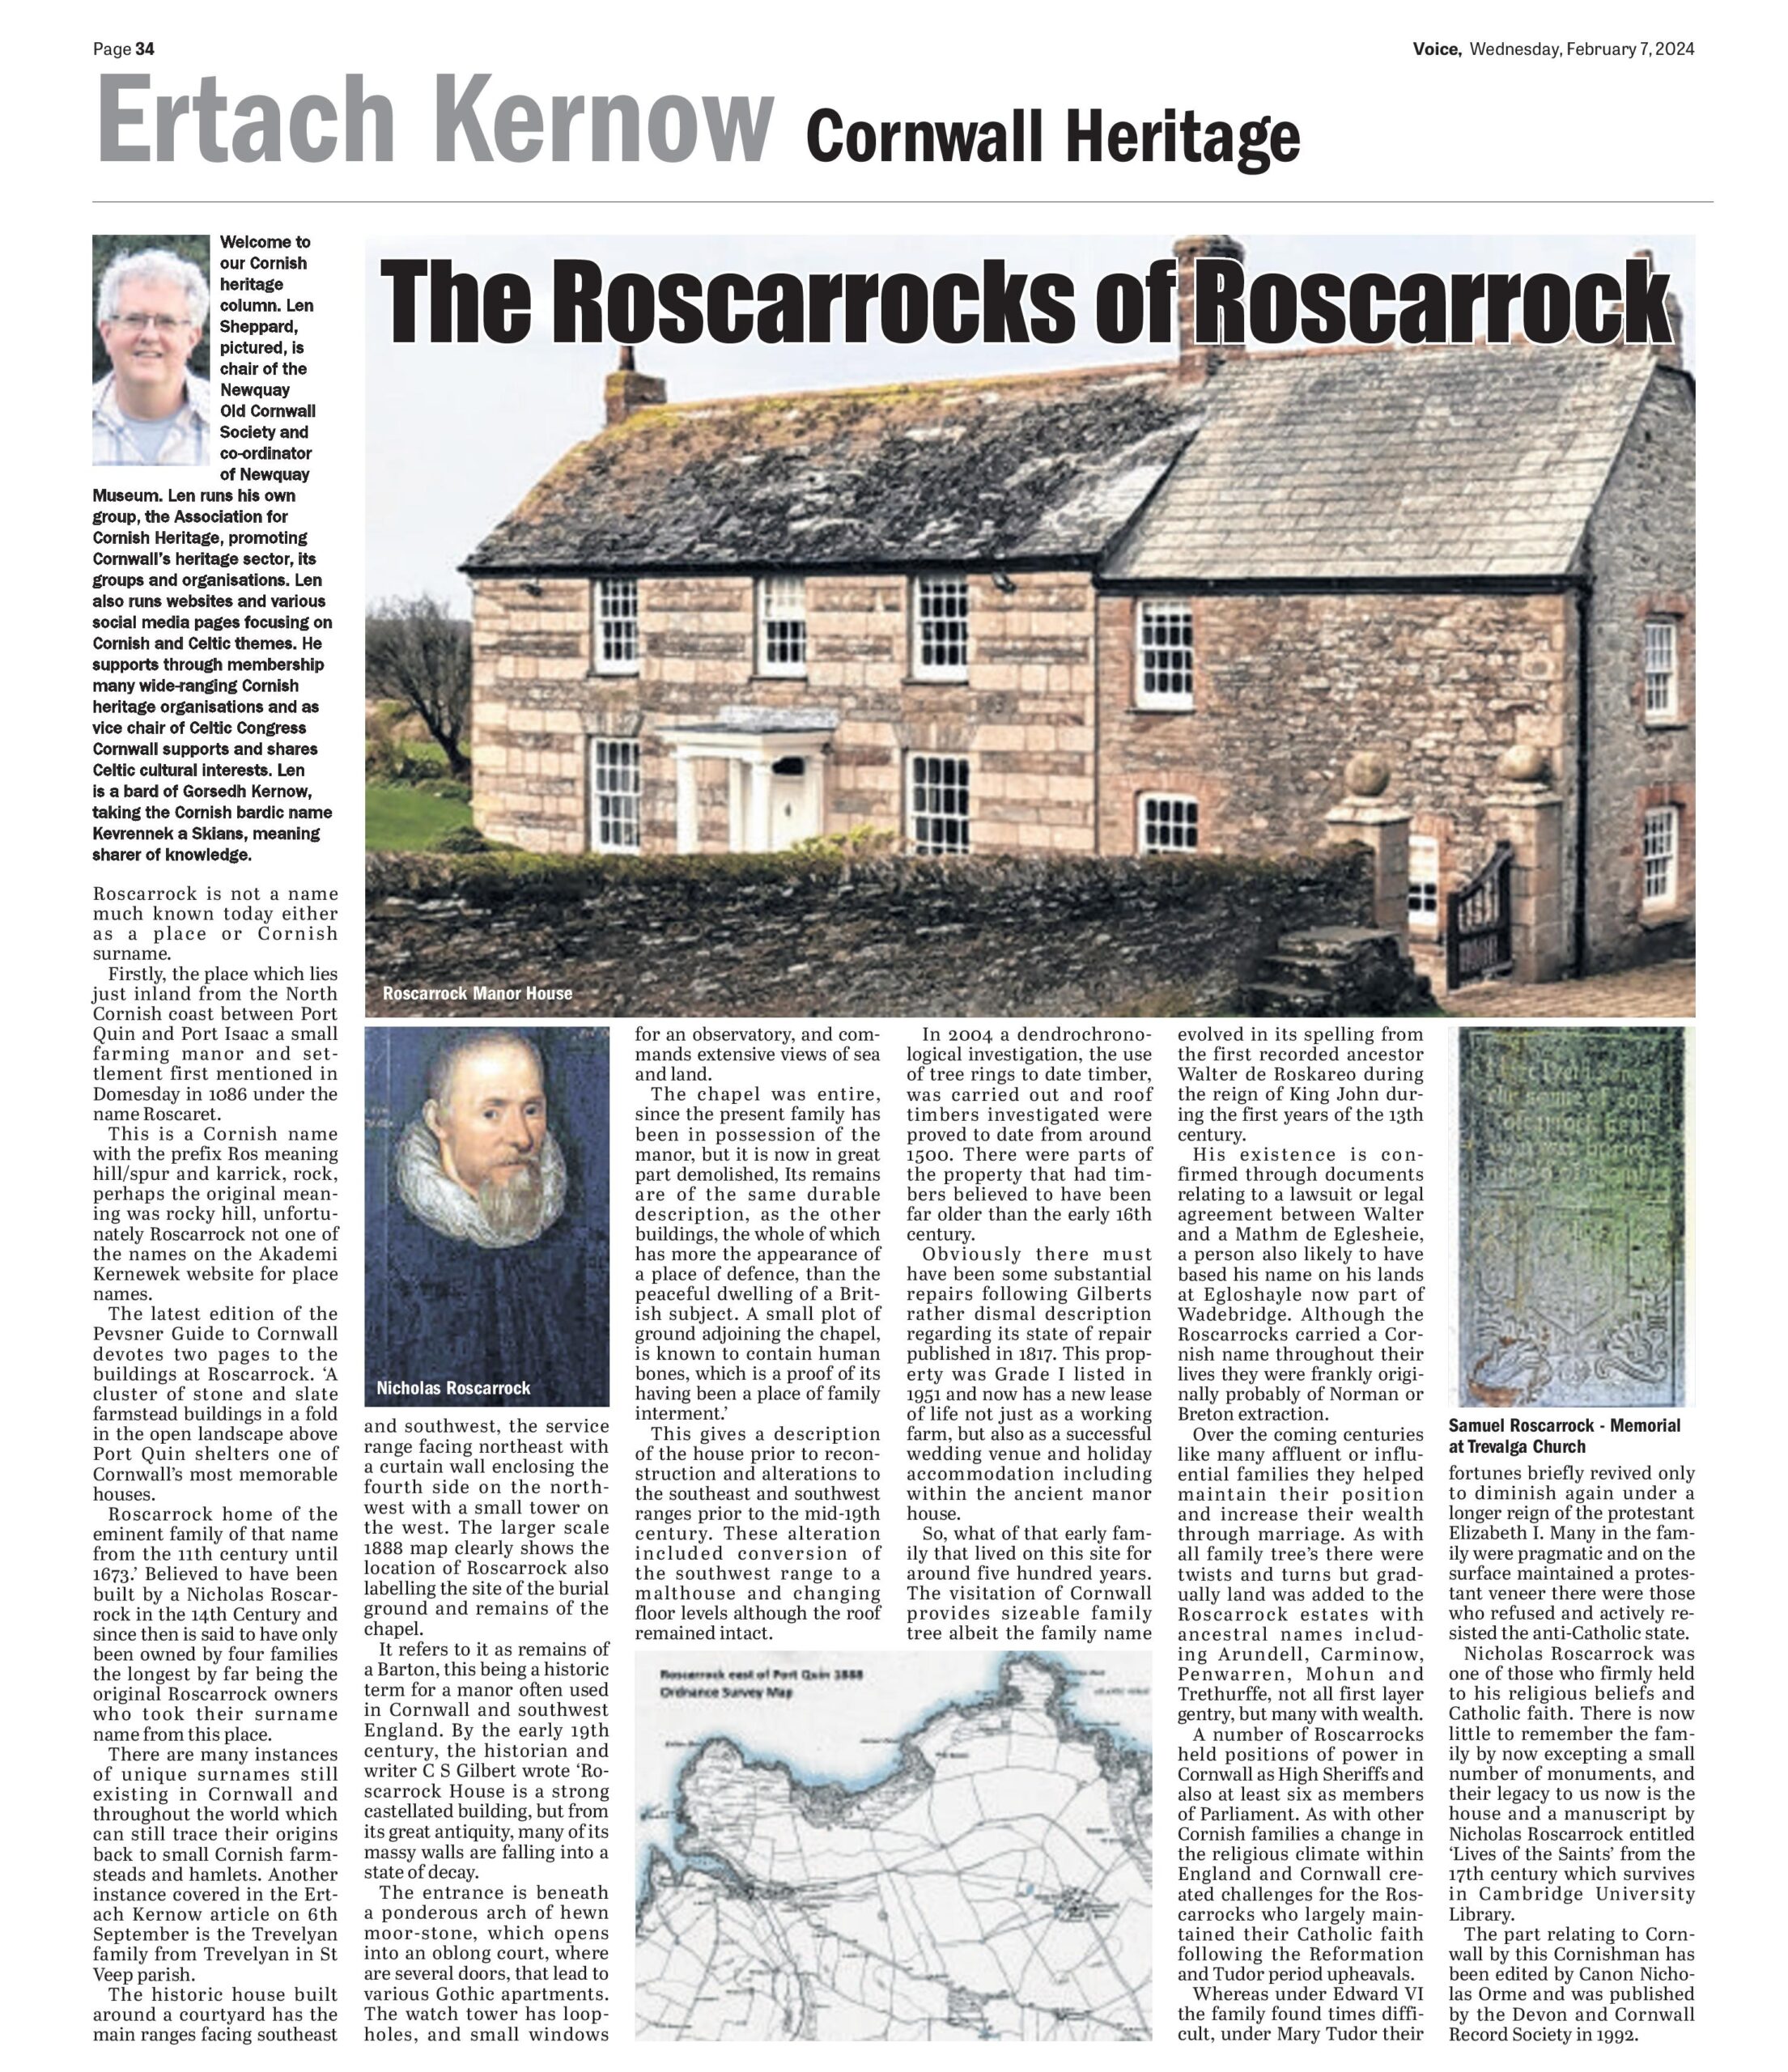 Roscarrocks of Roscarrock